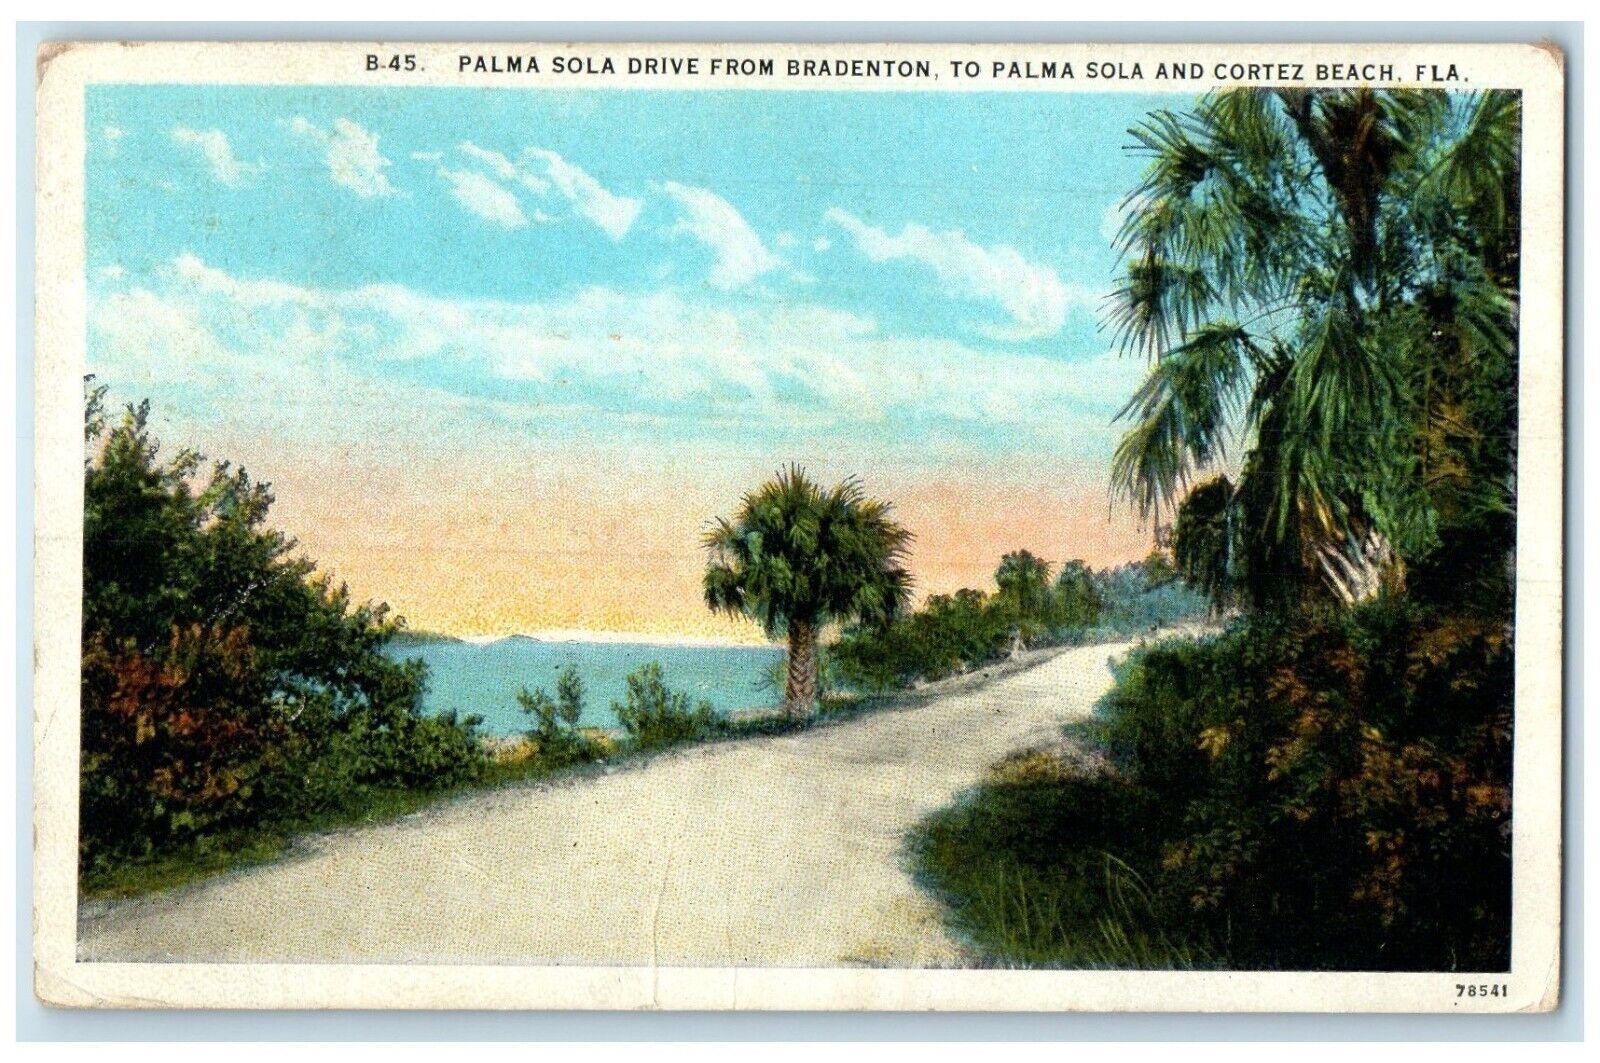 1937 Scenic View Palma Sola Drive Bradenton Cortez Beach Florida Posted Postcard